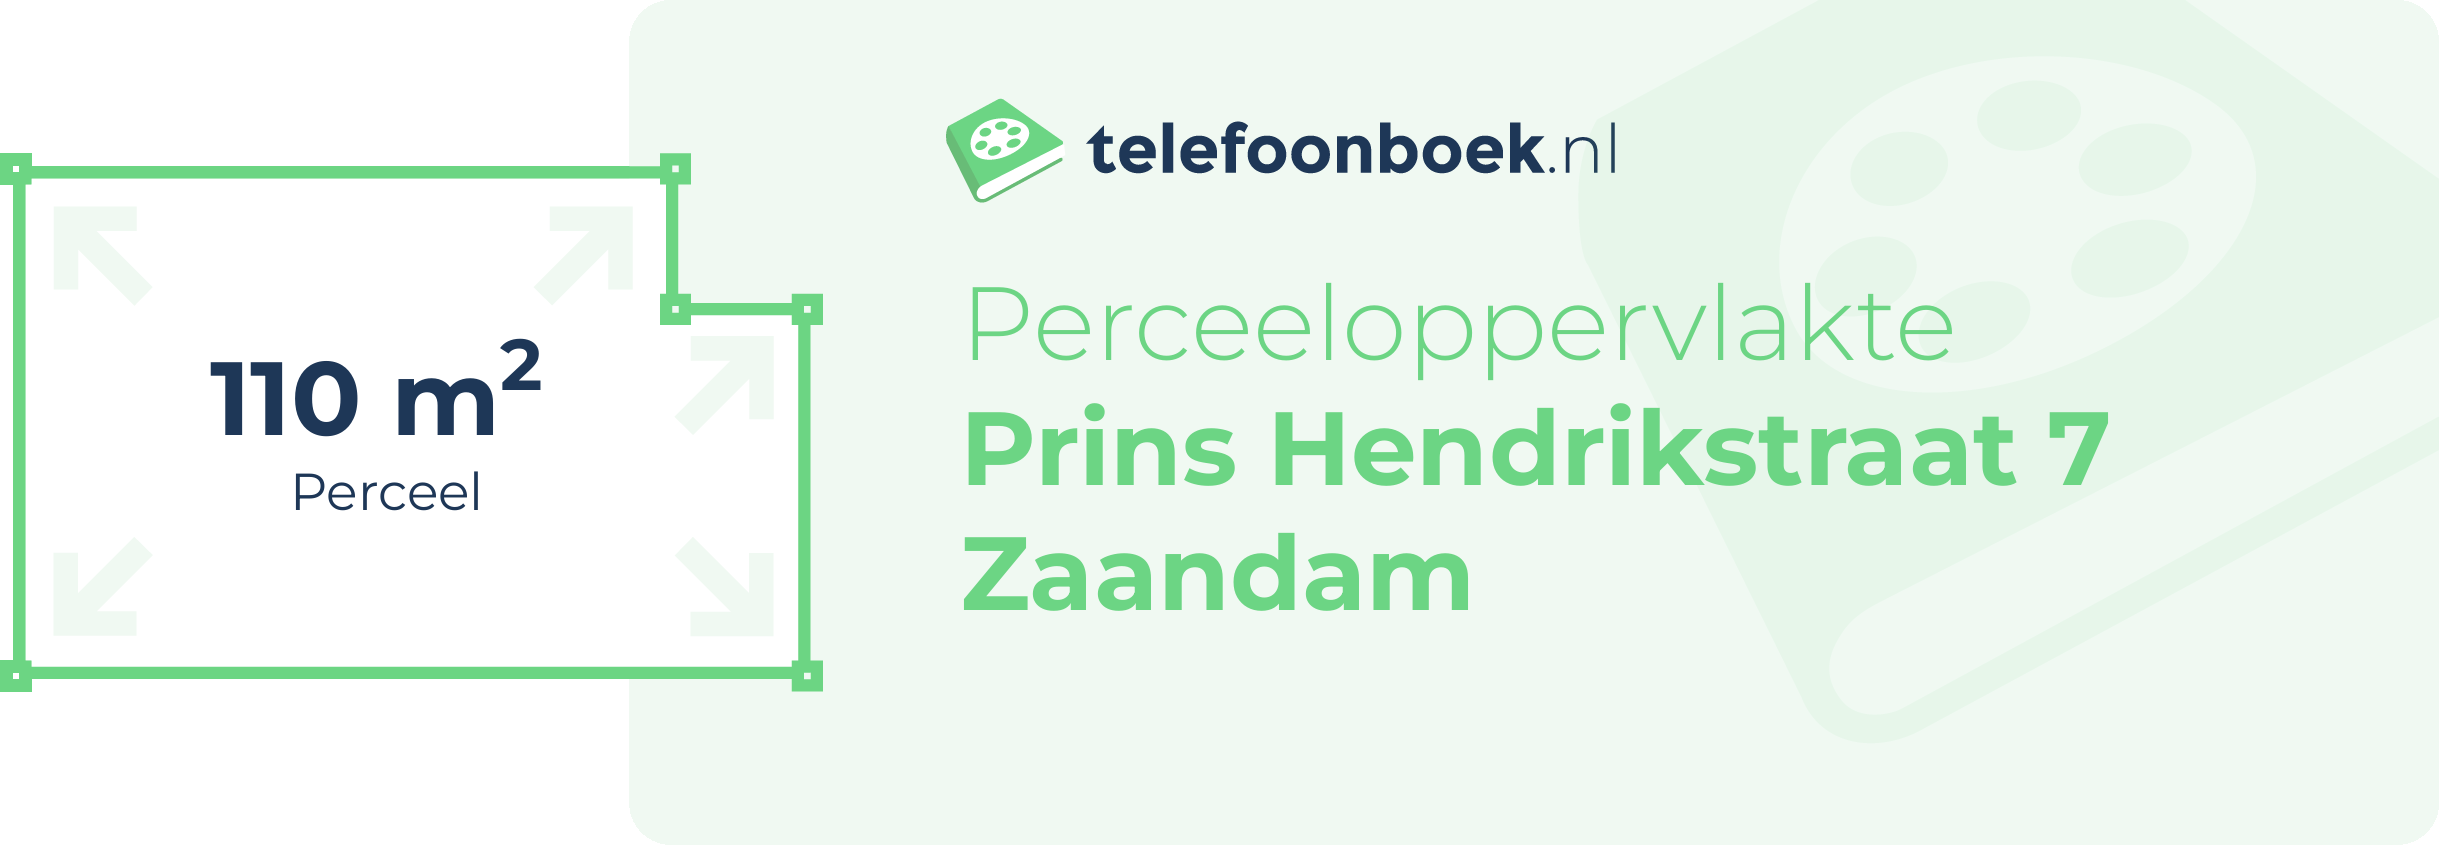 Perceeloppervlakte Prins Hendrikstraat 7 Zaandam